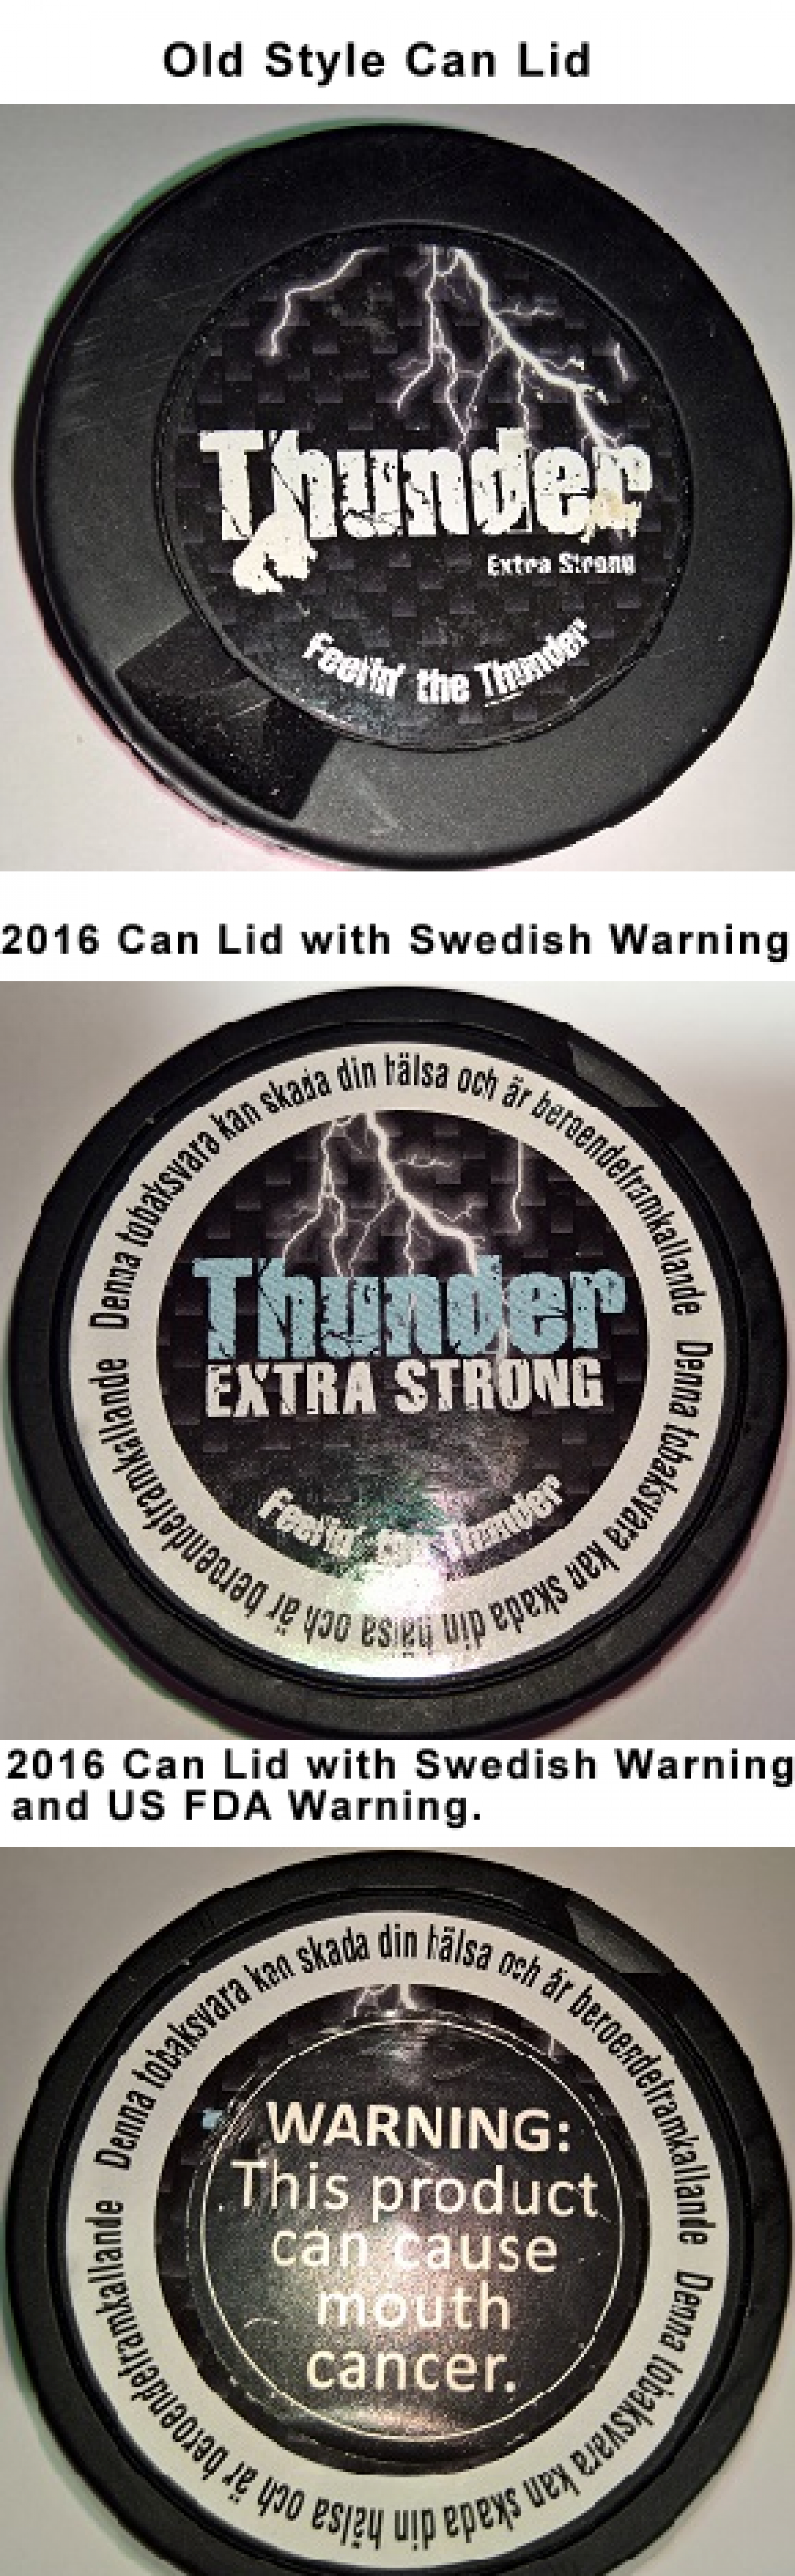 Sweden Surrenders to new EU-mandated Snus Warning Labels